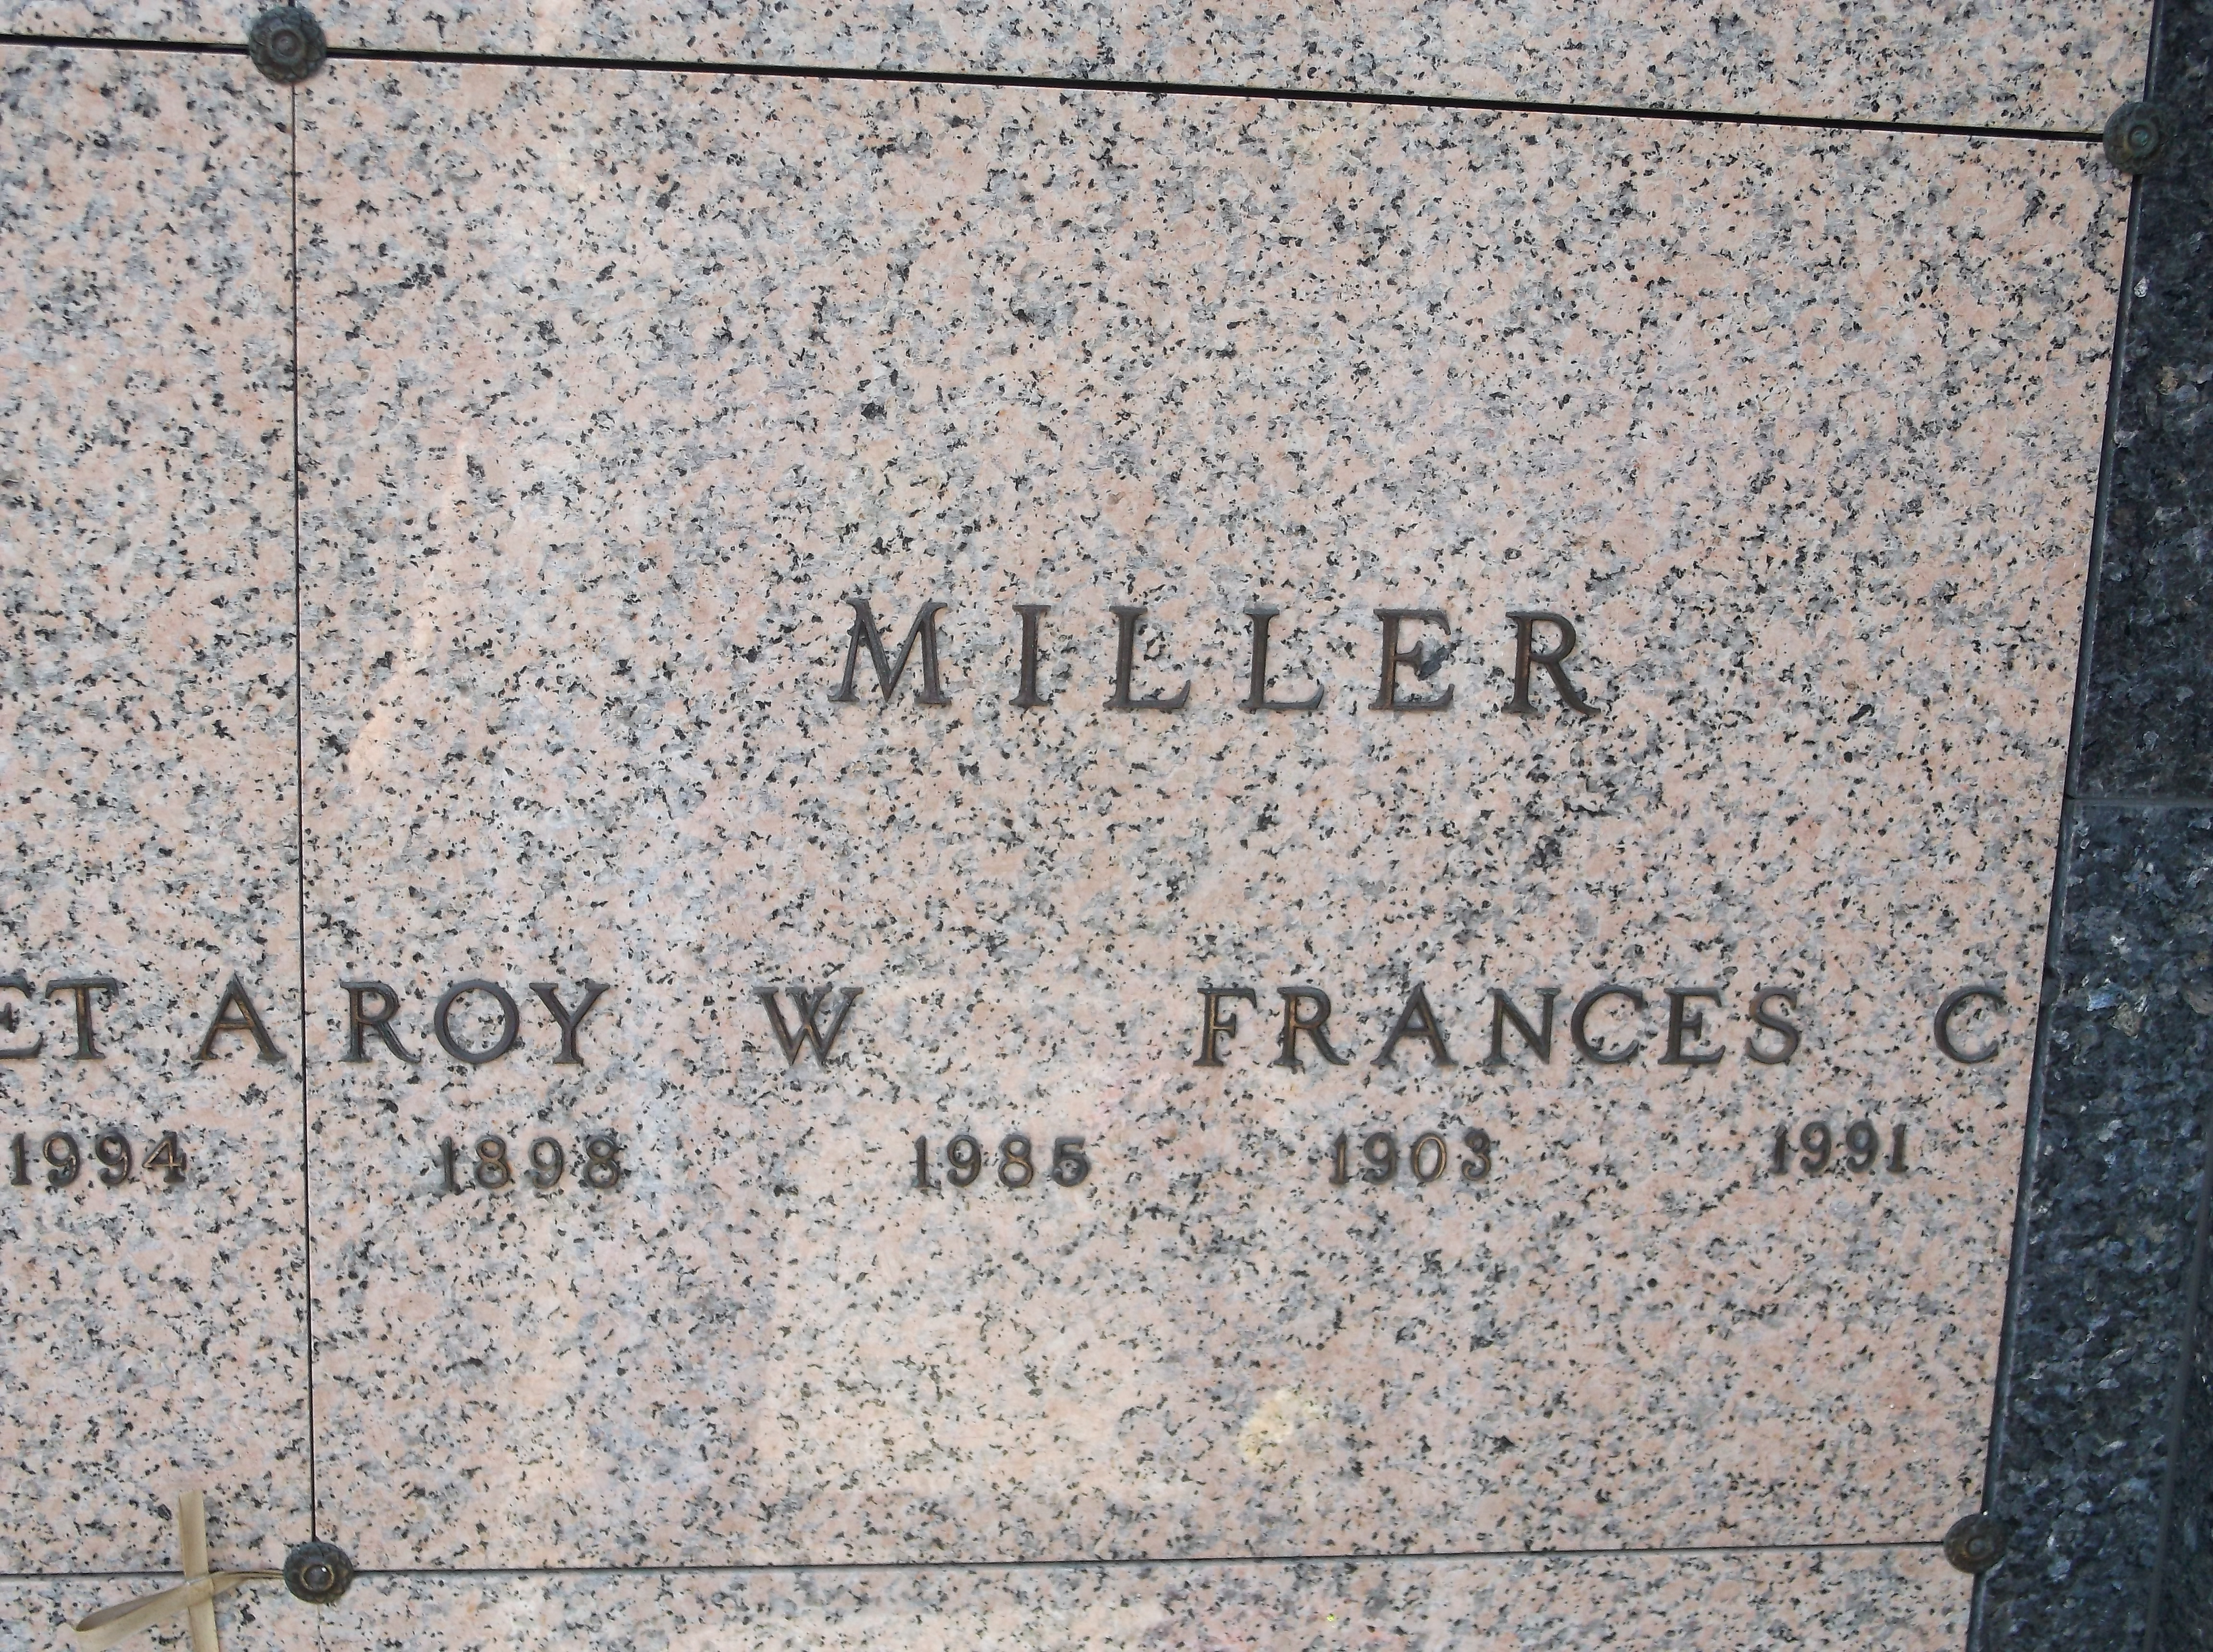 Roy W Miller